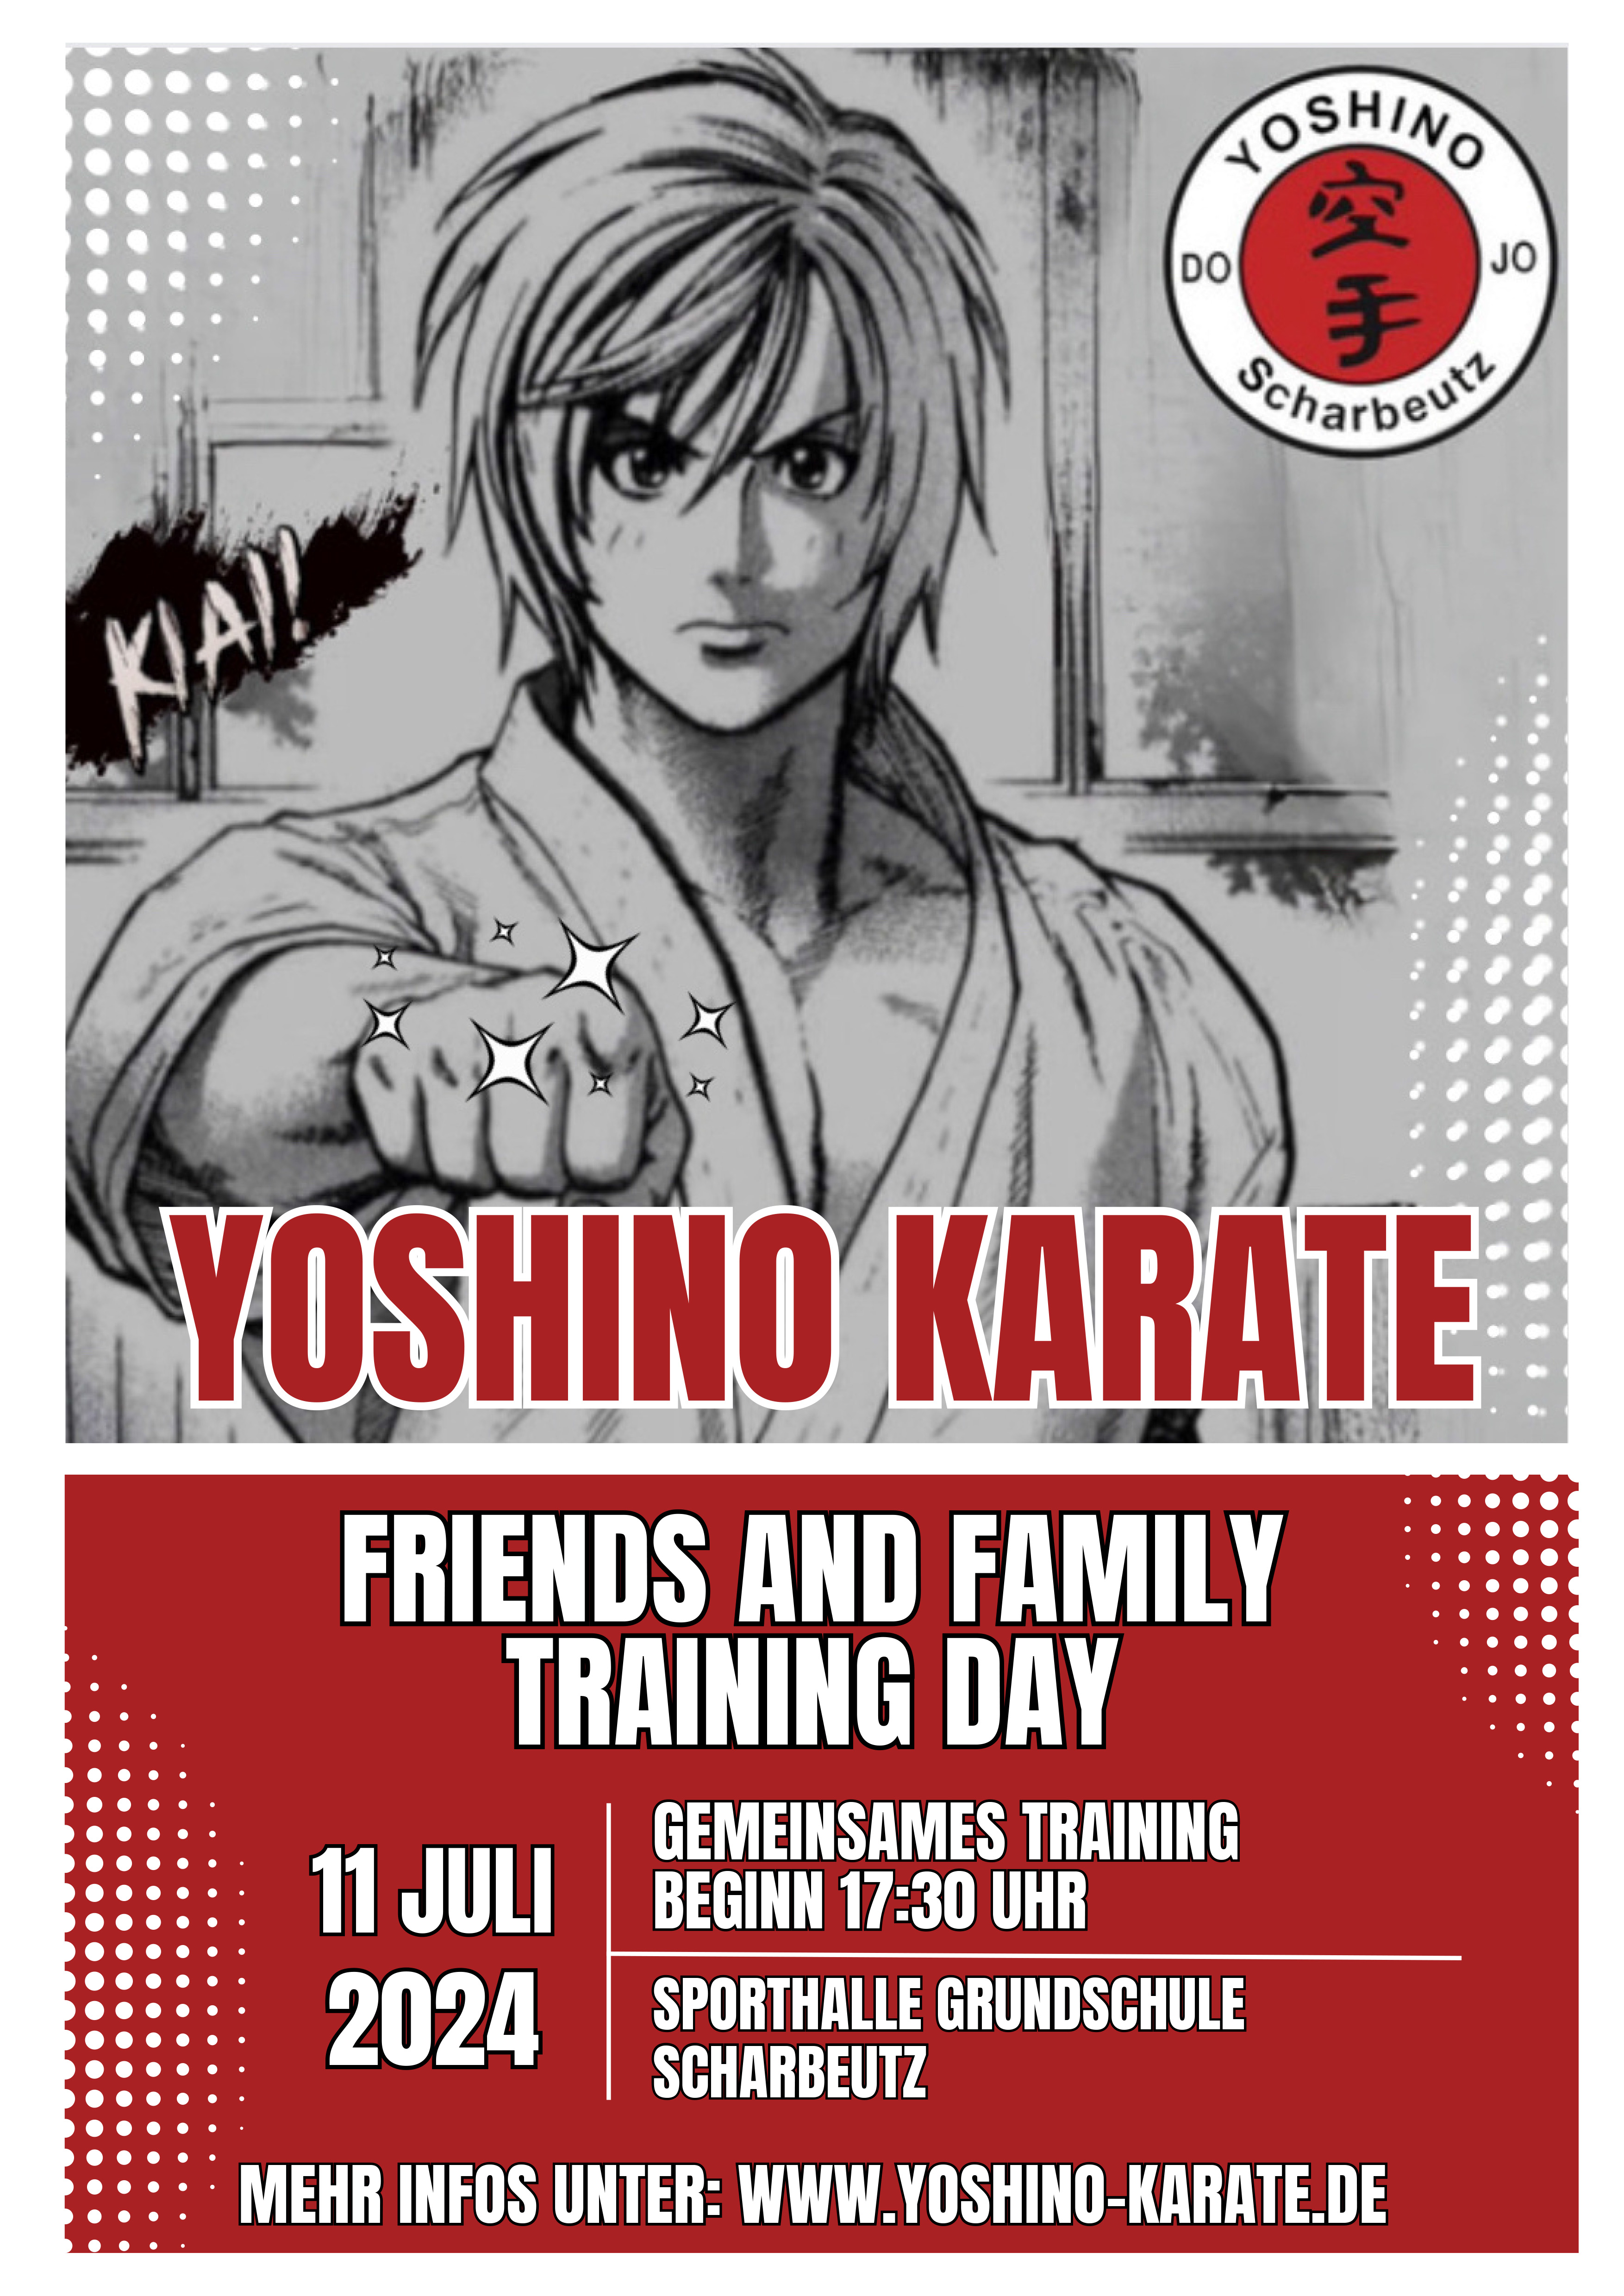 FRIENDS AND FAMILY TRAINING DAY - Yoshino Karate Scharbeutz